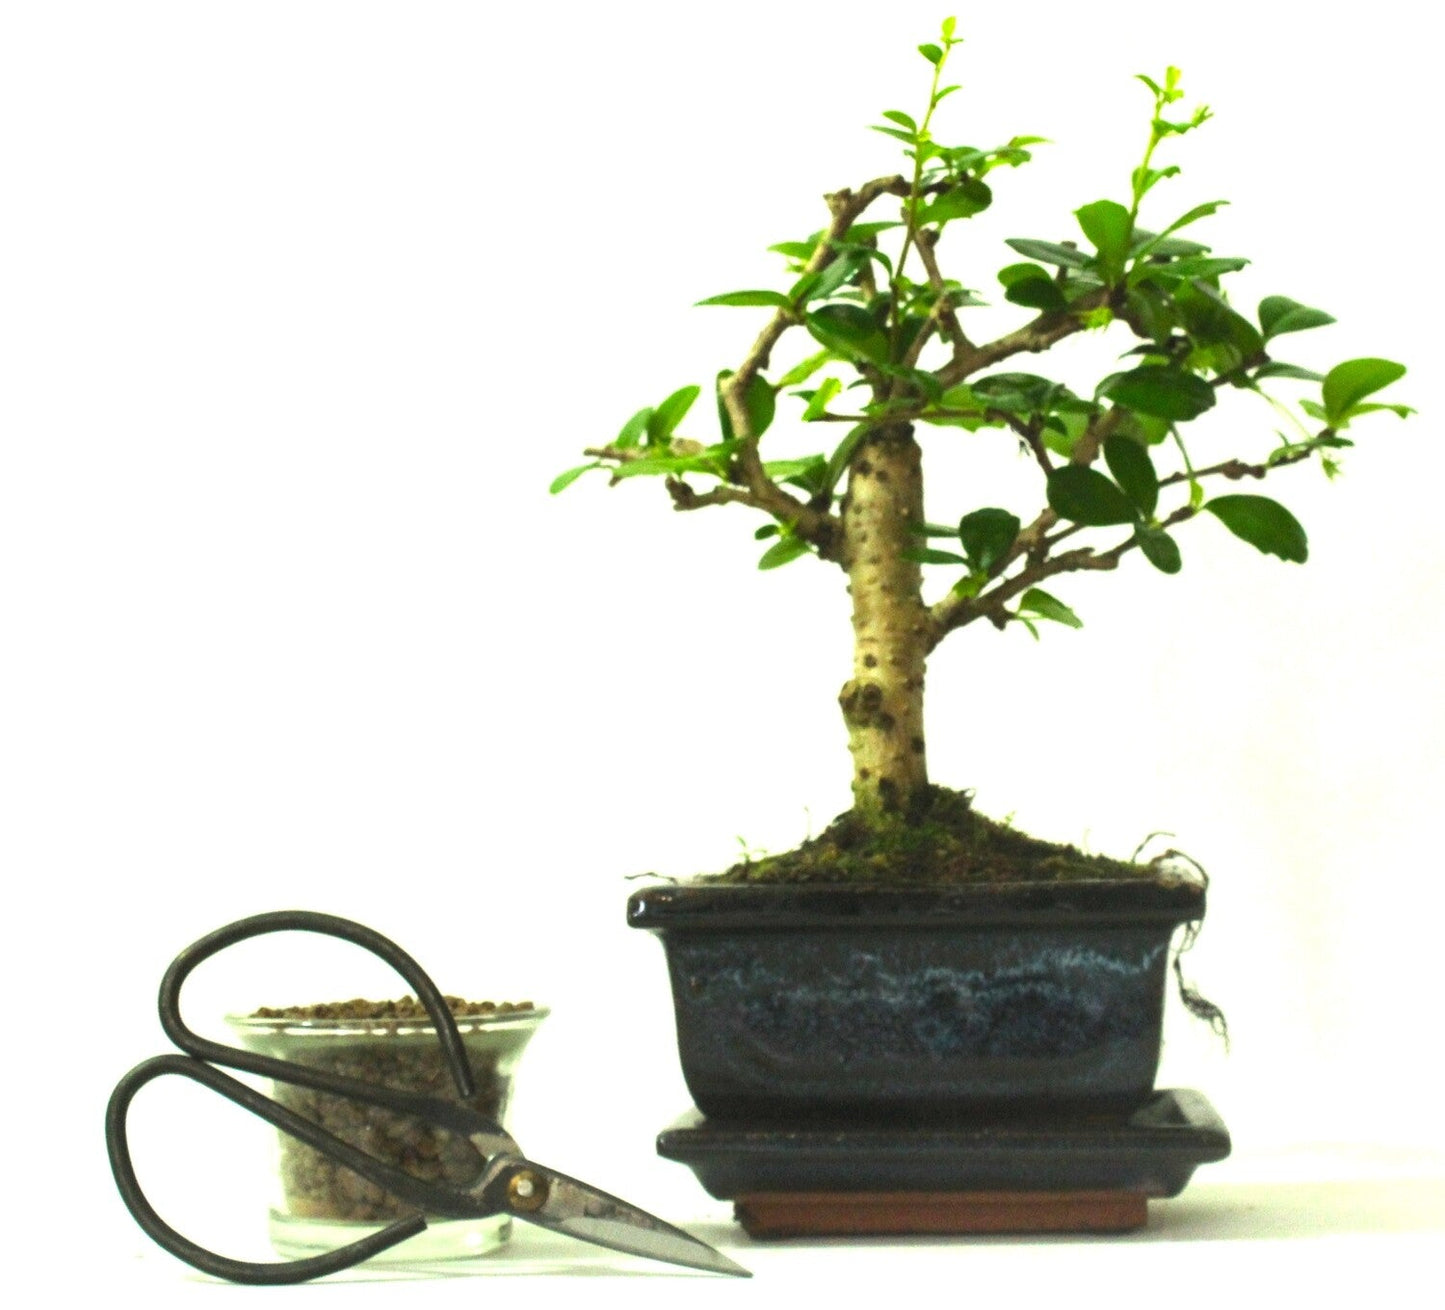 Carmona (Fukien Tea) flowering Bonsai Tree Broom Style - supplied with ceramic drip tray .